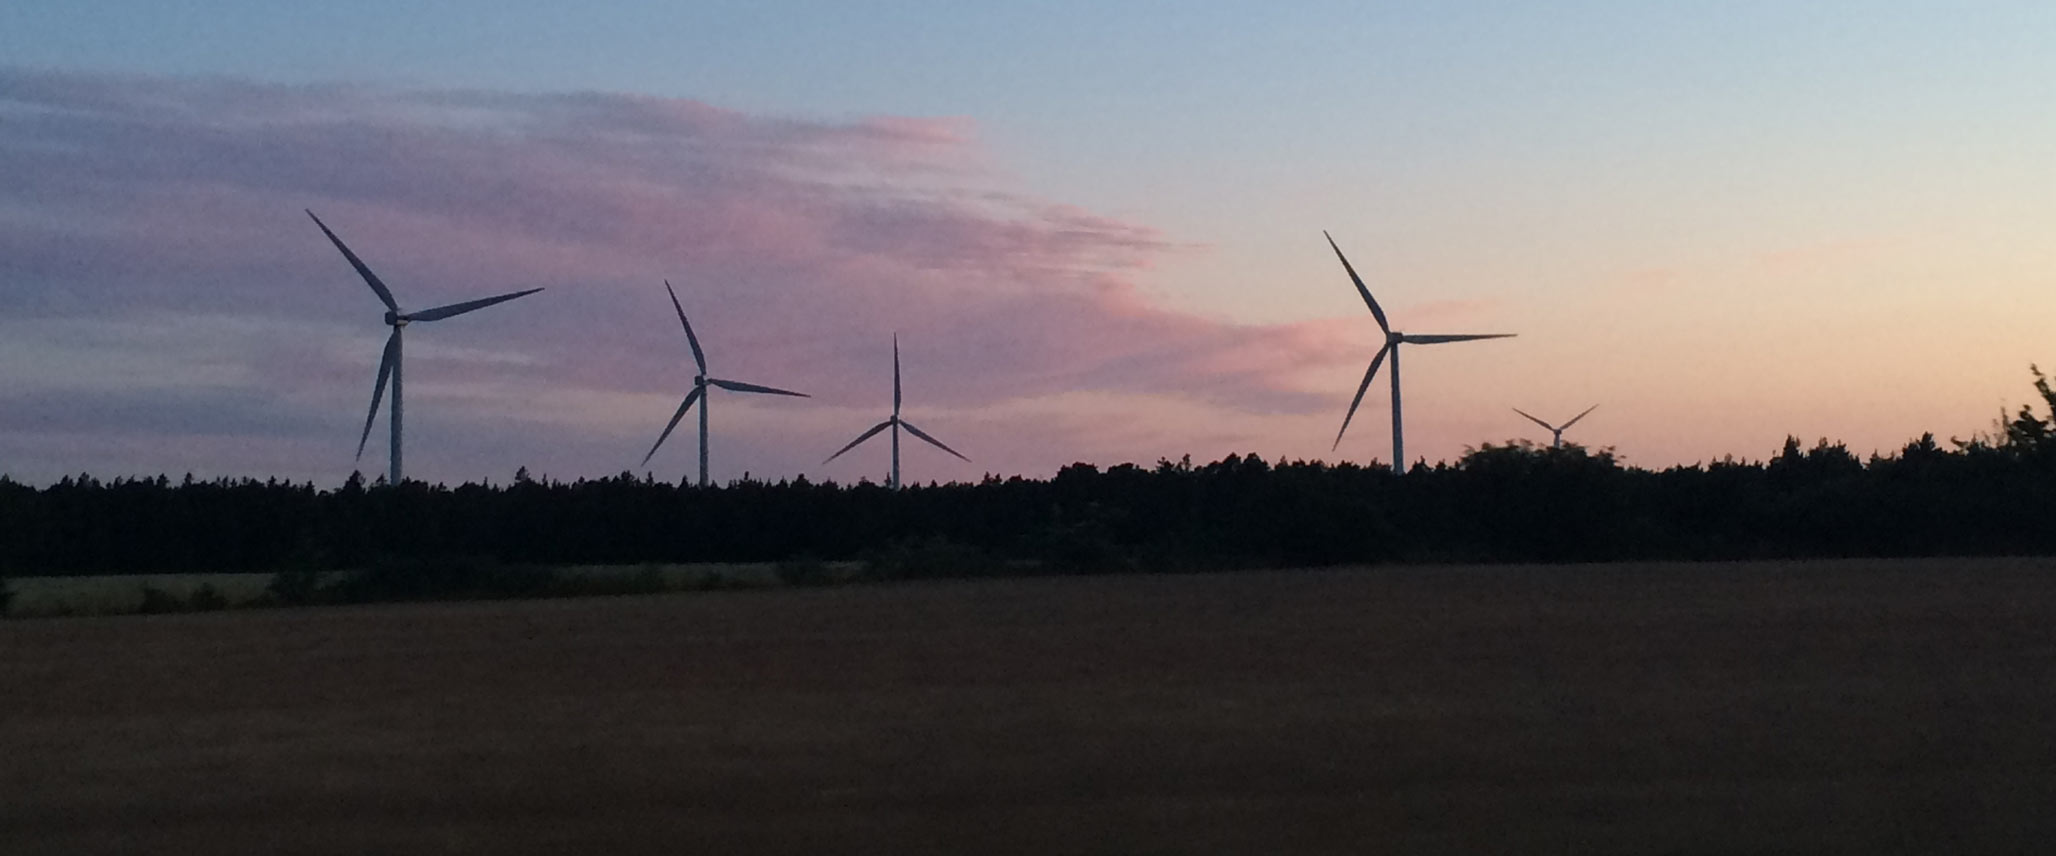 Windmills - Gotland